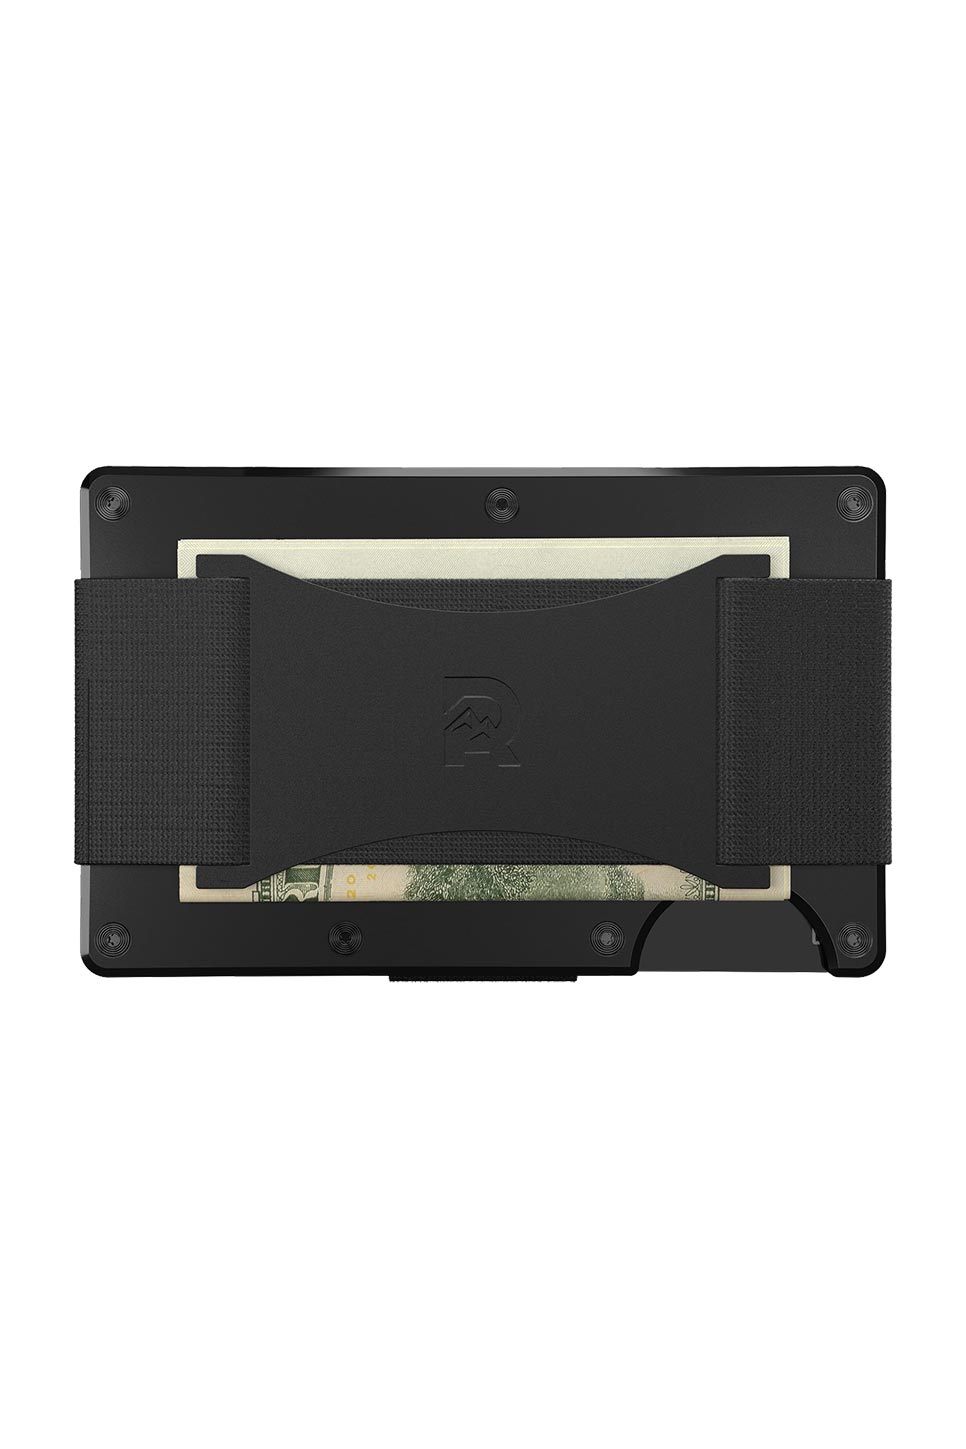 Ridge Wallet - Aluminum - Cash Strap - Black - Back